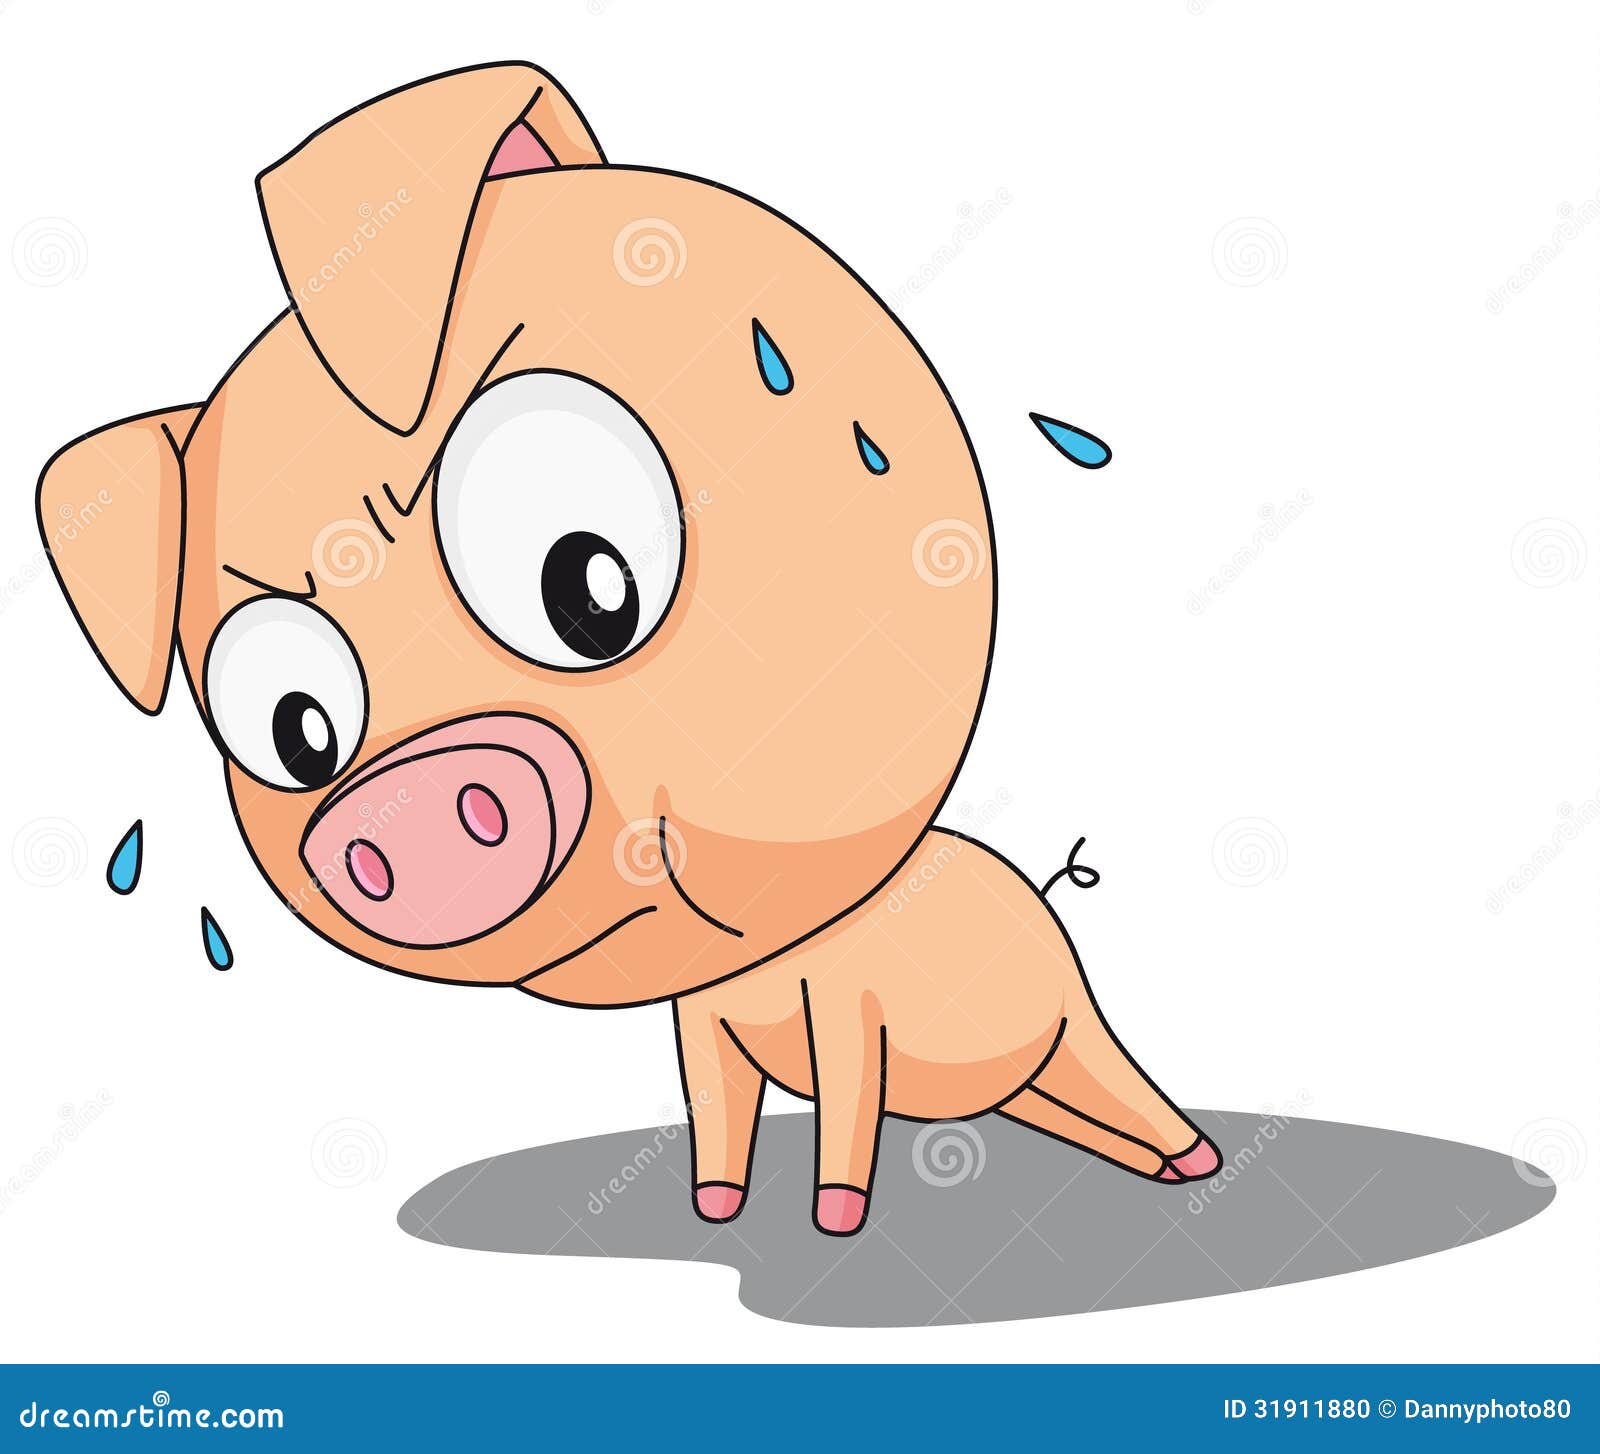 clip art funny pigs - photo #7